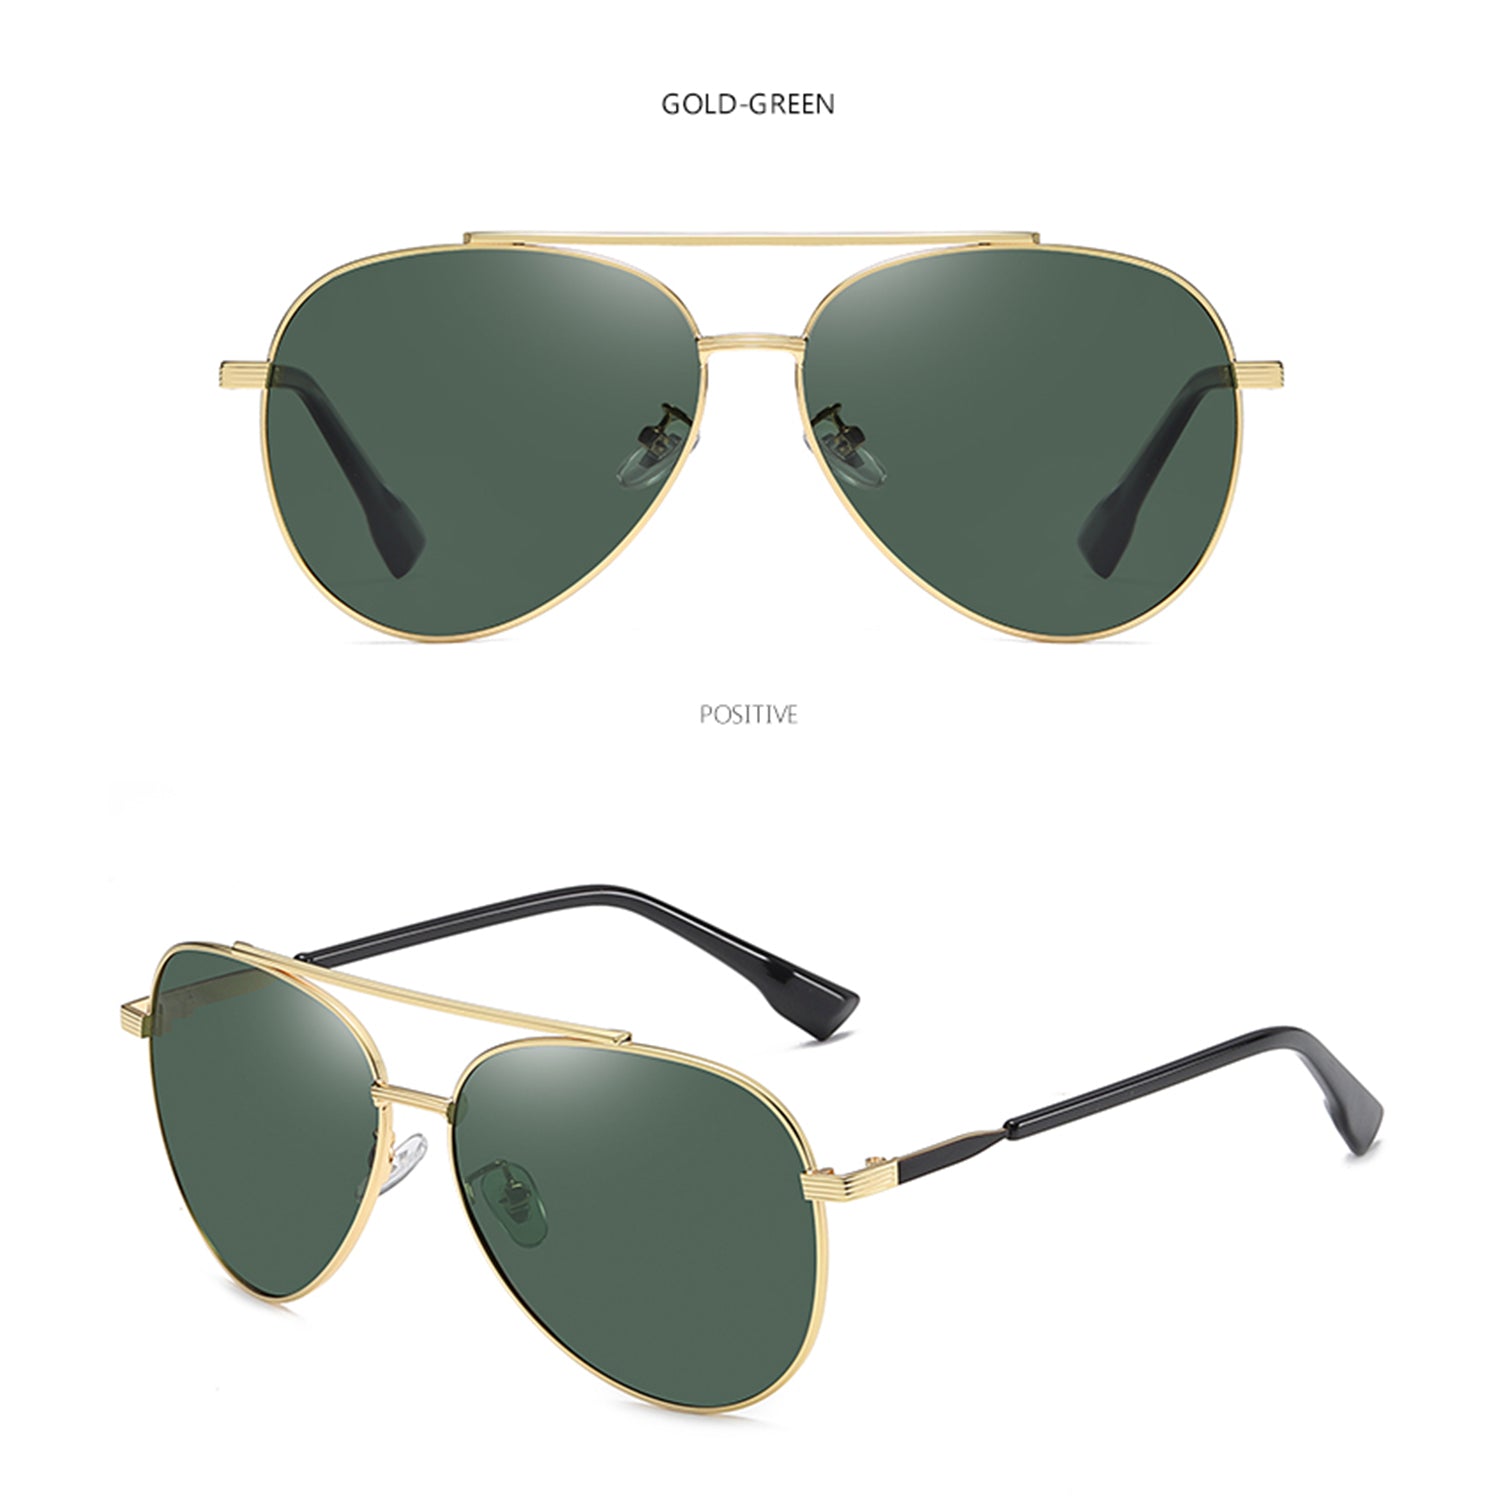 NALANDA Men's Green Polarized Sunglasses, Outdoor Sport Driving Sun Glasses, Classic Retro Designer Style, 100% UV Blocking